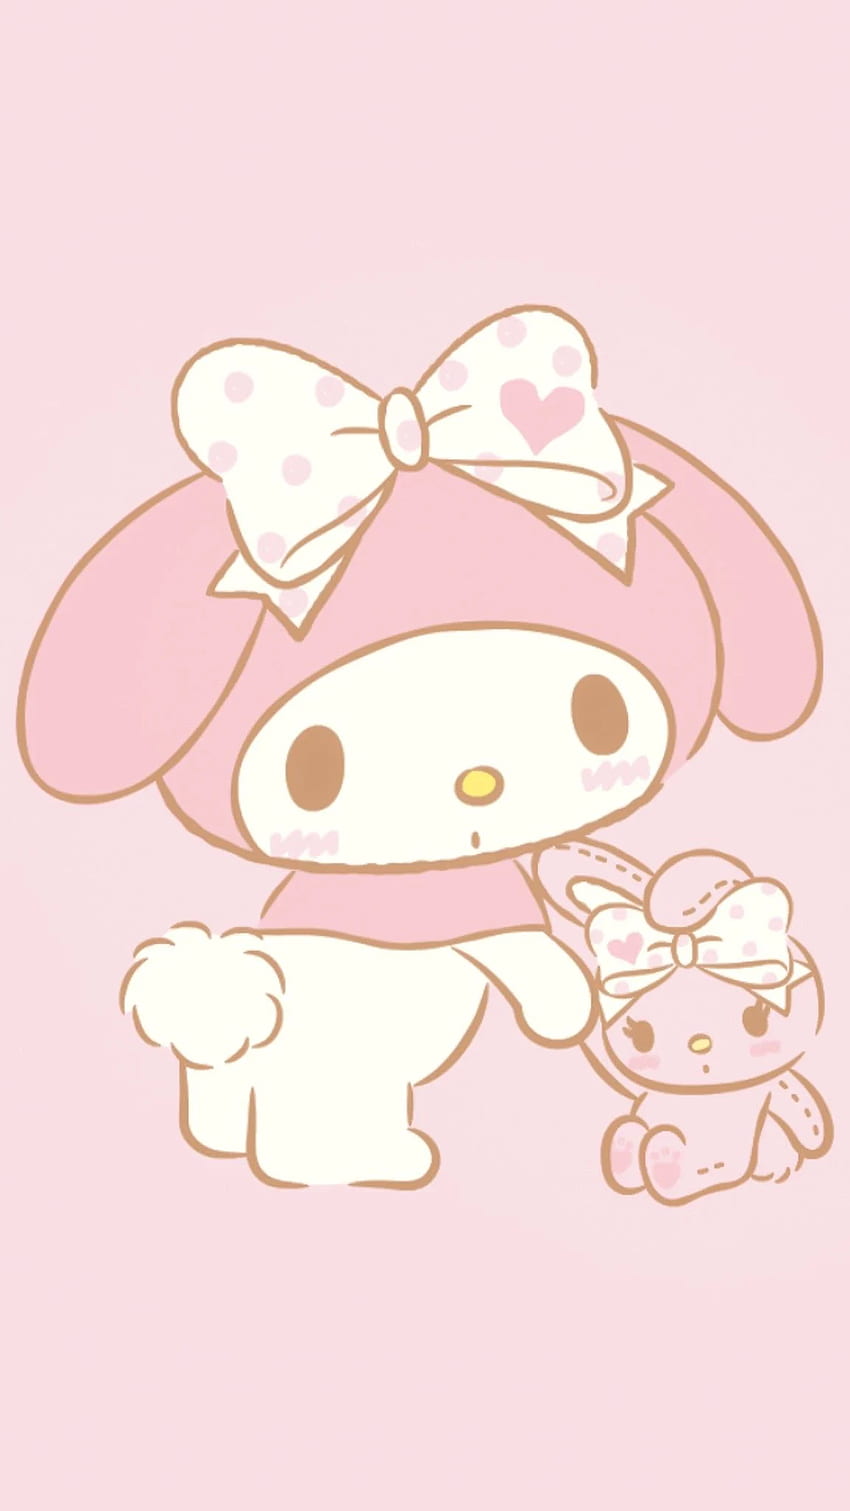 Sanrio - Kuromi & Melody in cute/kawaii outfits  Mobile wallpaper  [1080x1920] : r/SoftAesthetic